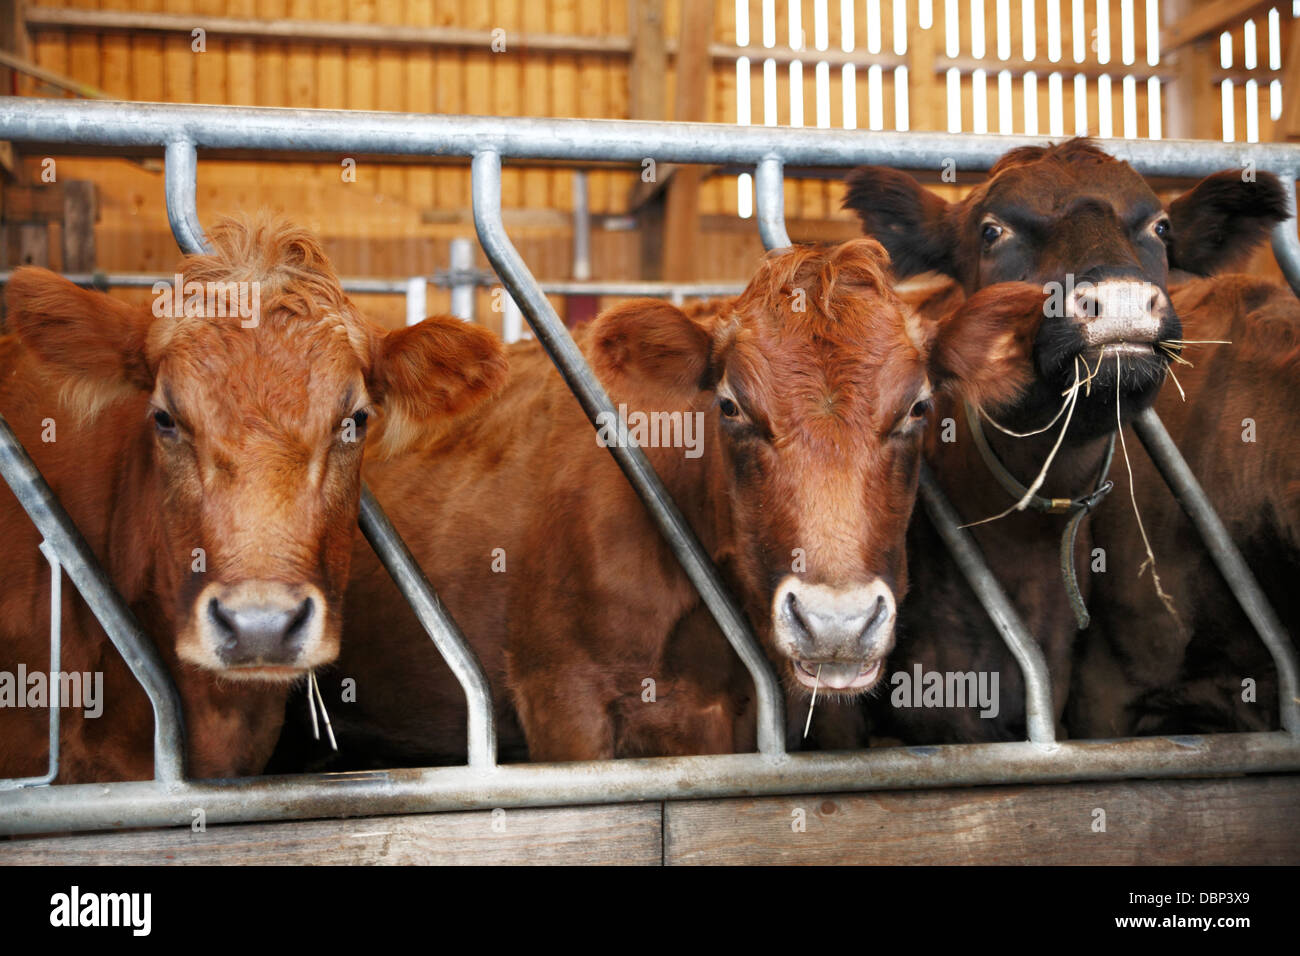 https://c8.alamy.com/comp/DBP3X9/feeding-of-cows-in-cow-shed-DBP3X9.jpg